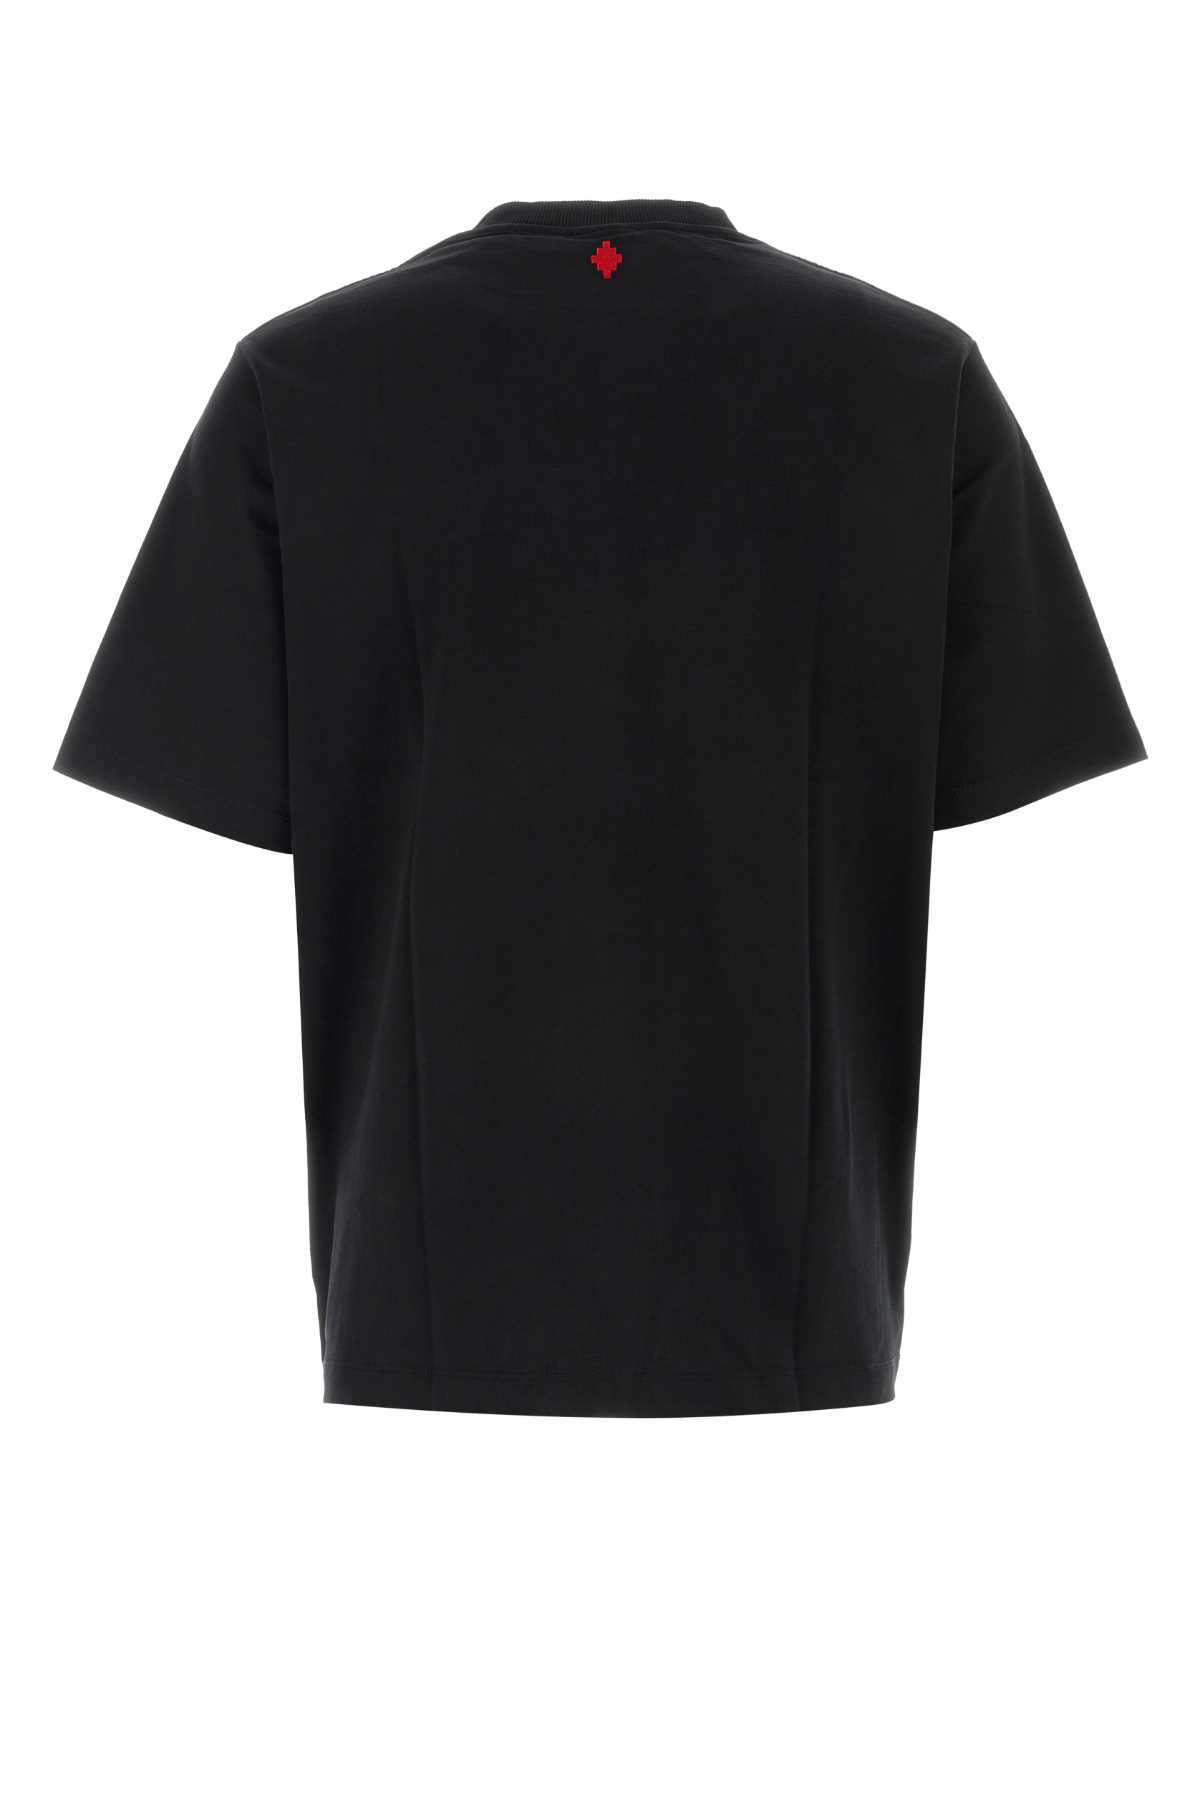 Marcelo Burlon County Of Milan Black Cotton T-shirt In Blackred